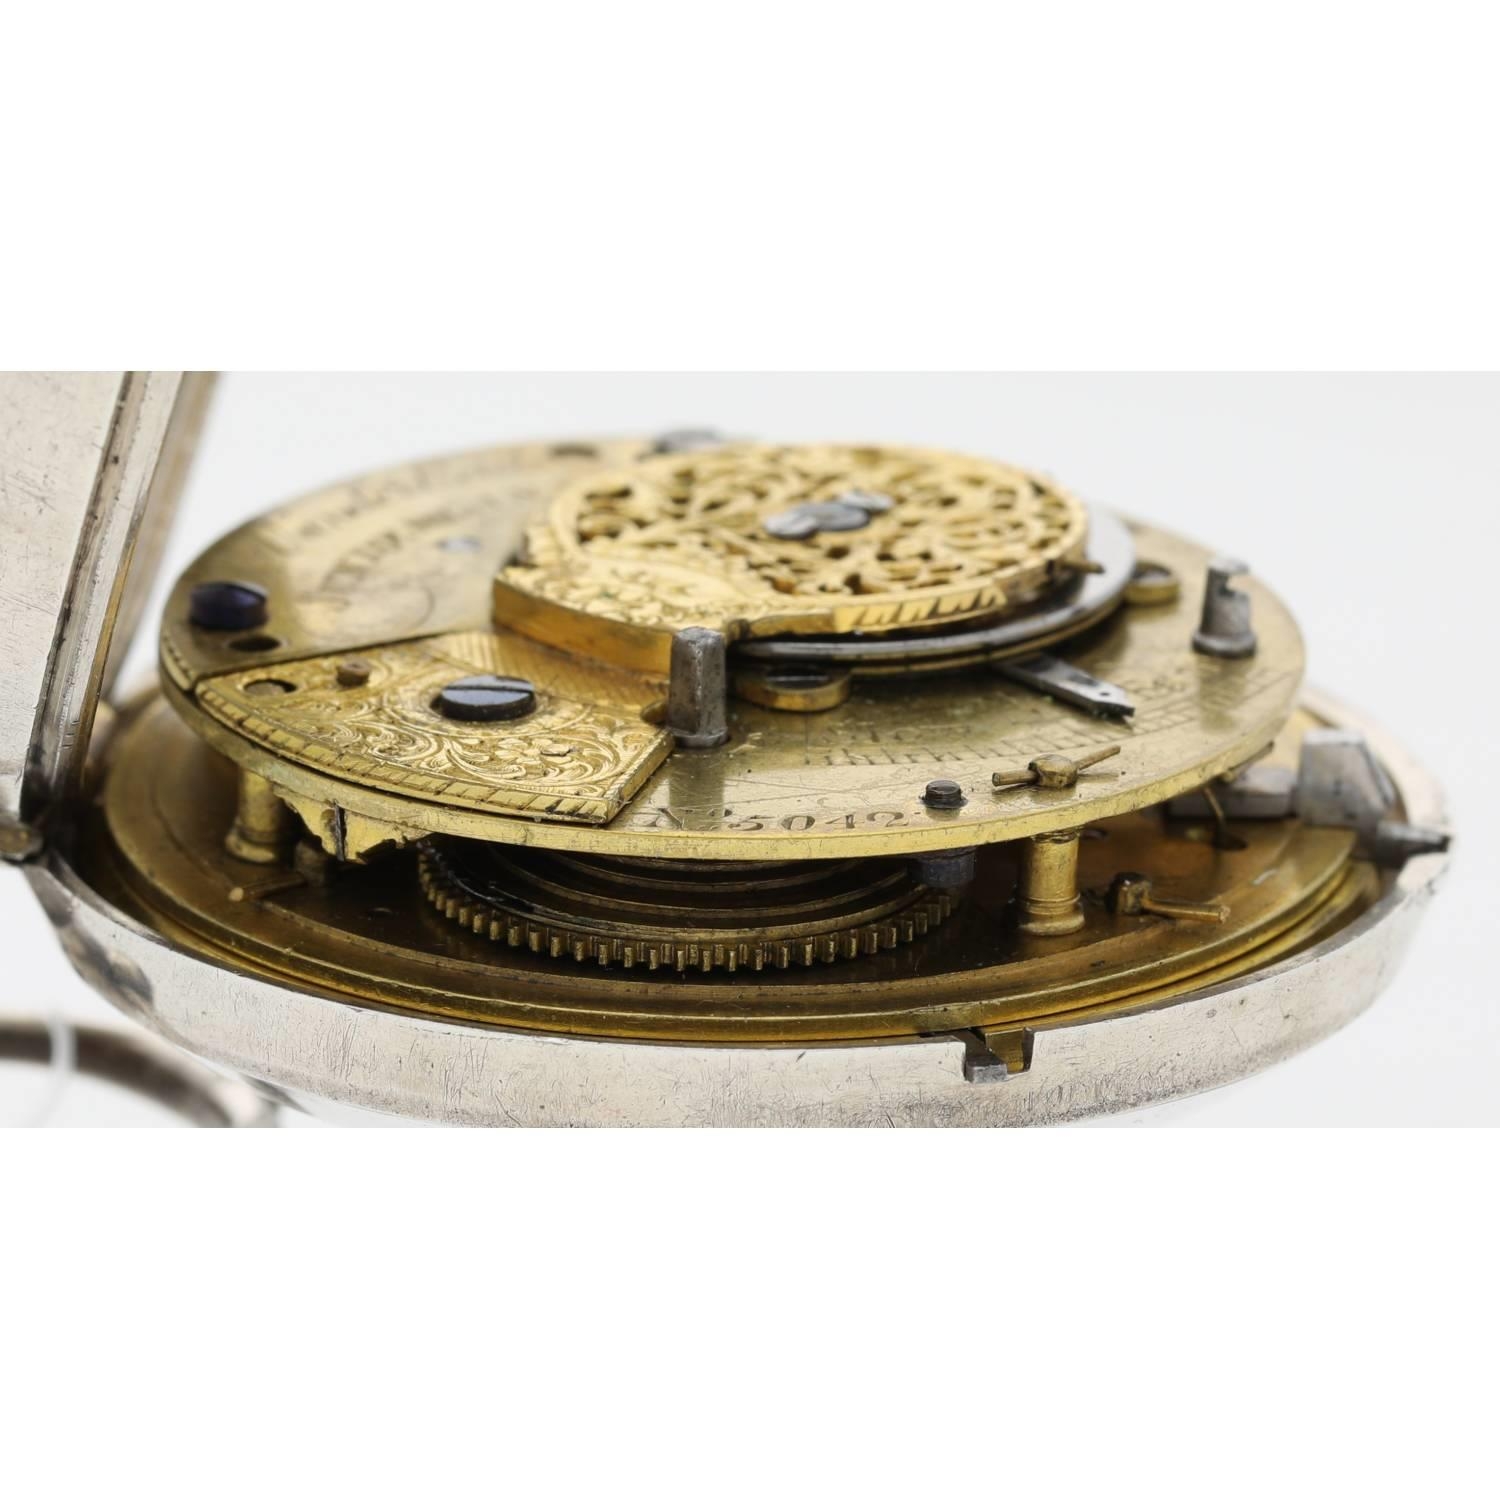 D. Vander Velde, Sunderland - early 19th century English silver pair cased verge pocket watch, - Image 5 of 10